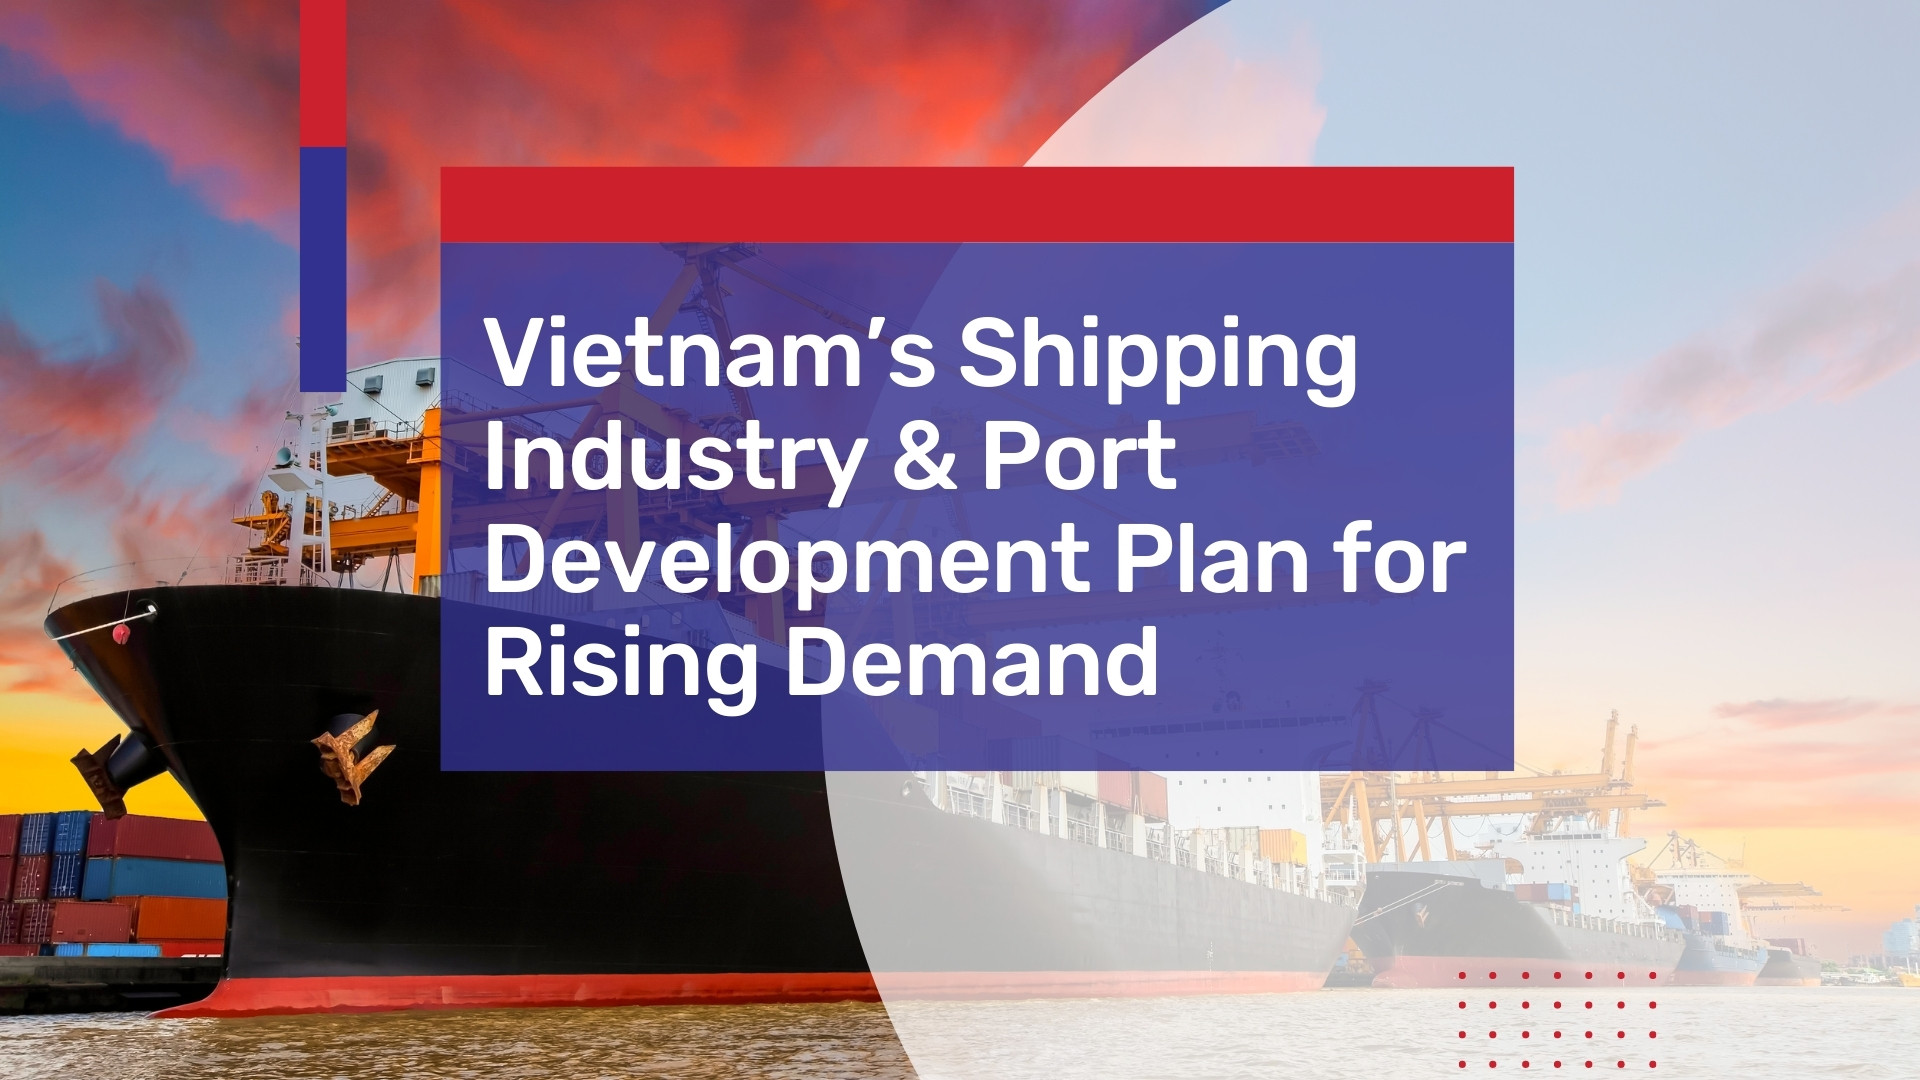 Vietnam’s Shipping Industry & Port Development Plan for Rising Demand – Trade Surplus of $3.9B